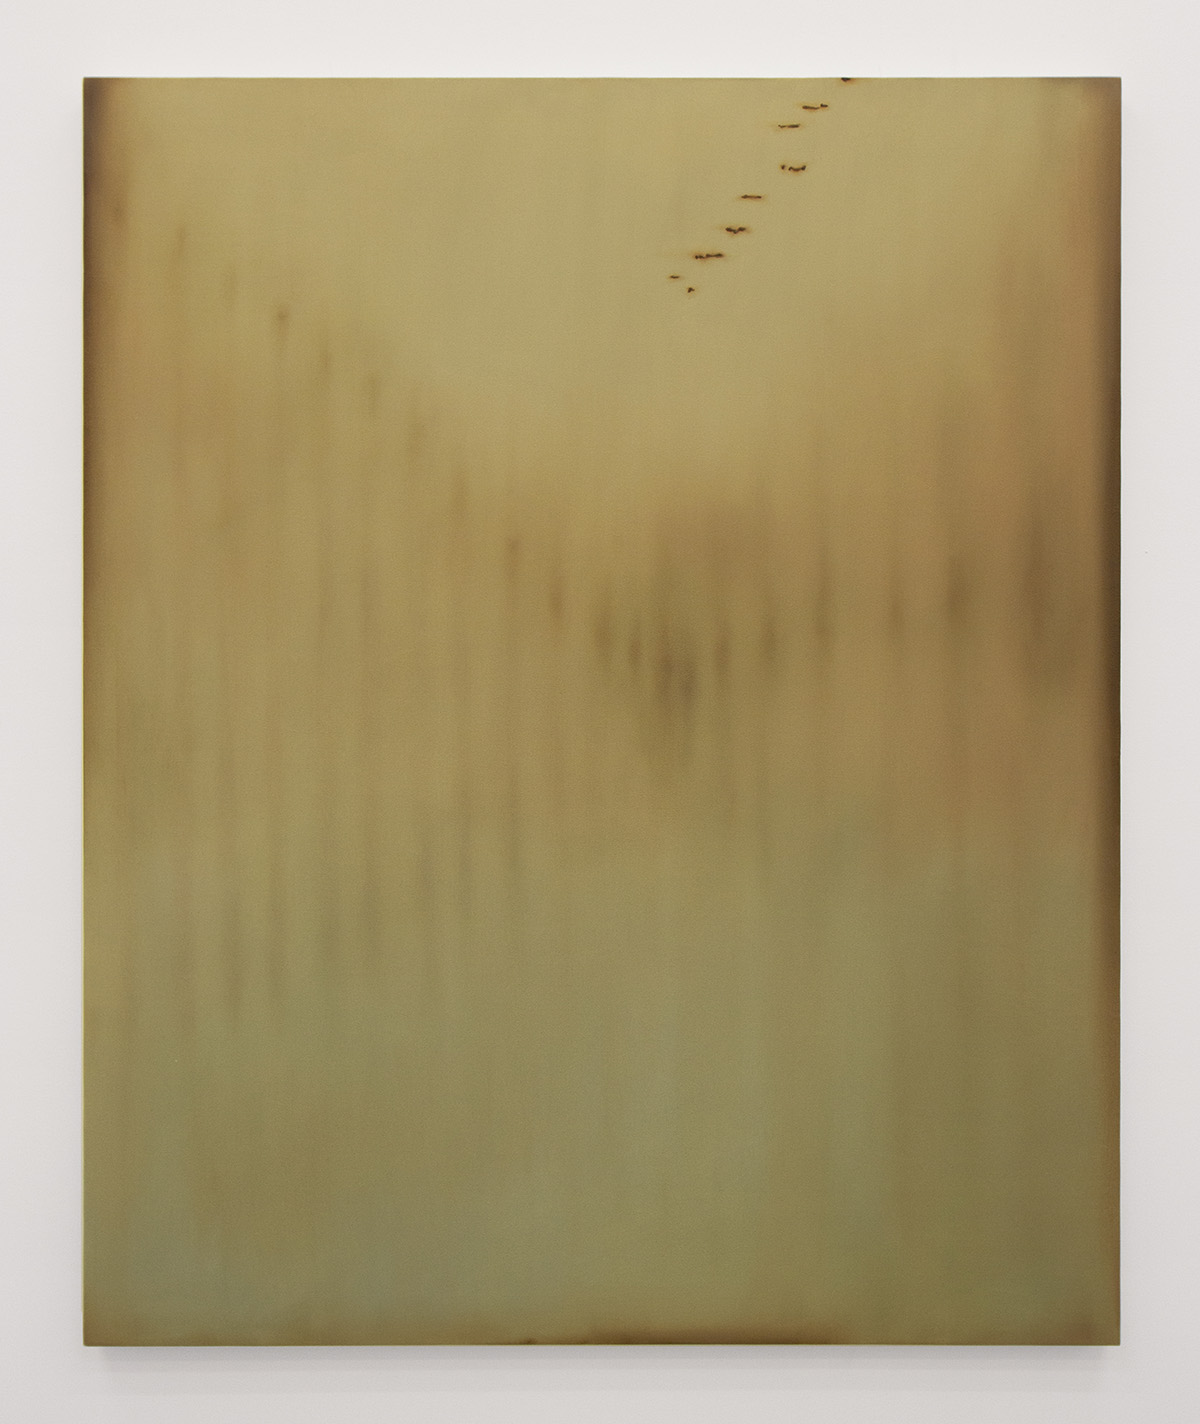 Shi Jiayun, Rust, 2019, oil on canvas, 137.6 x 111.8 cm, 54 1/8 x 44 in.​​